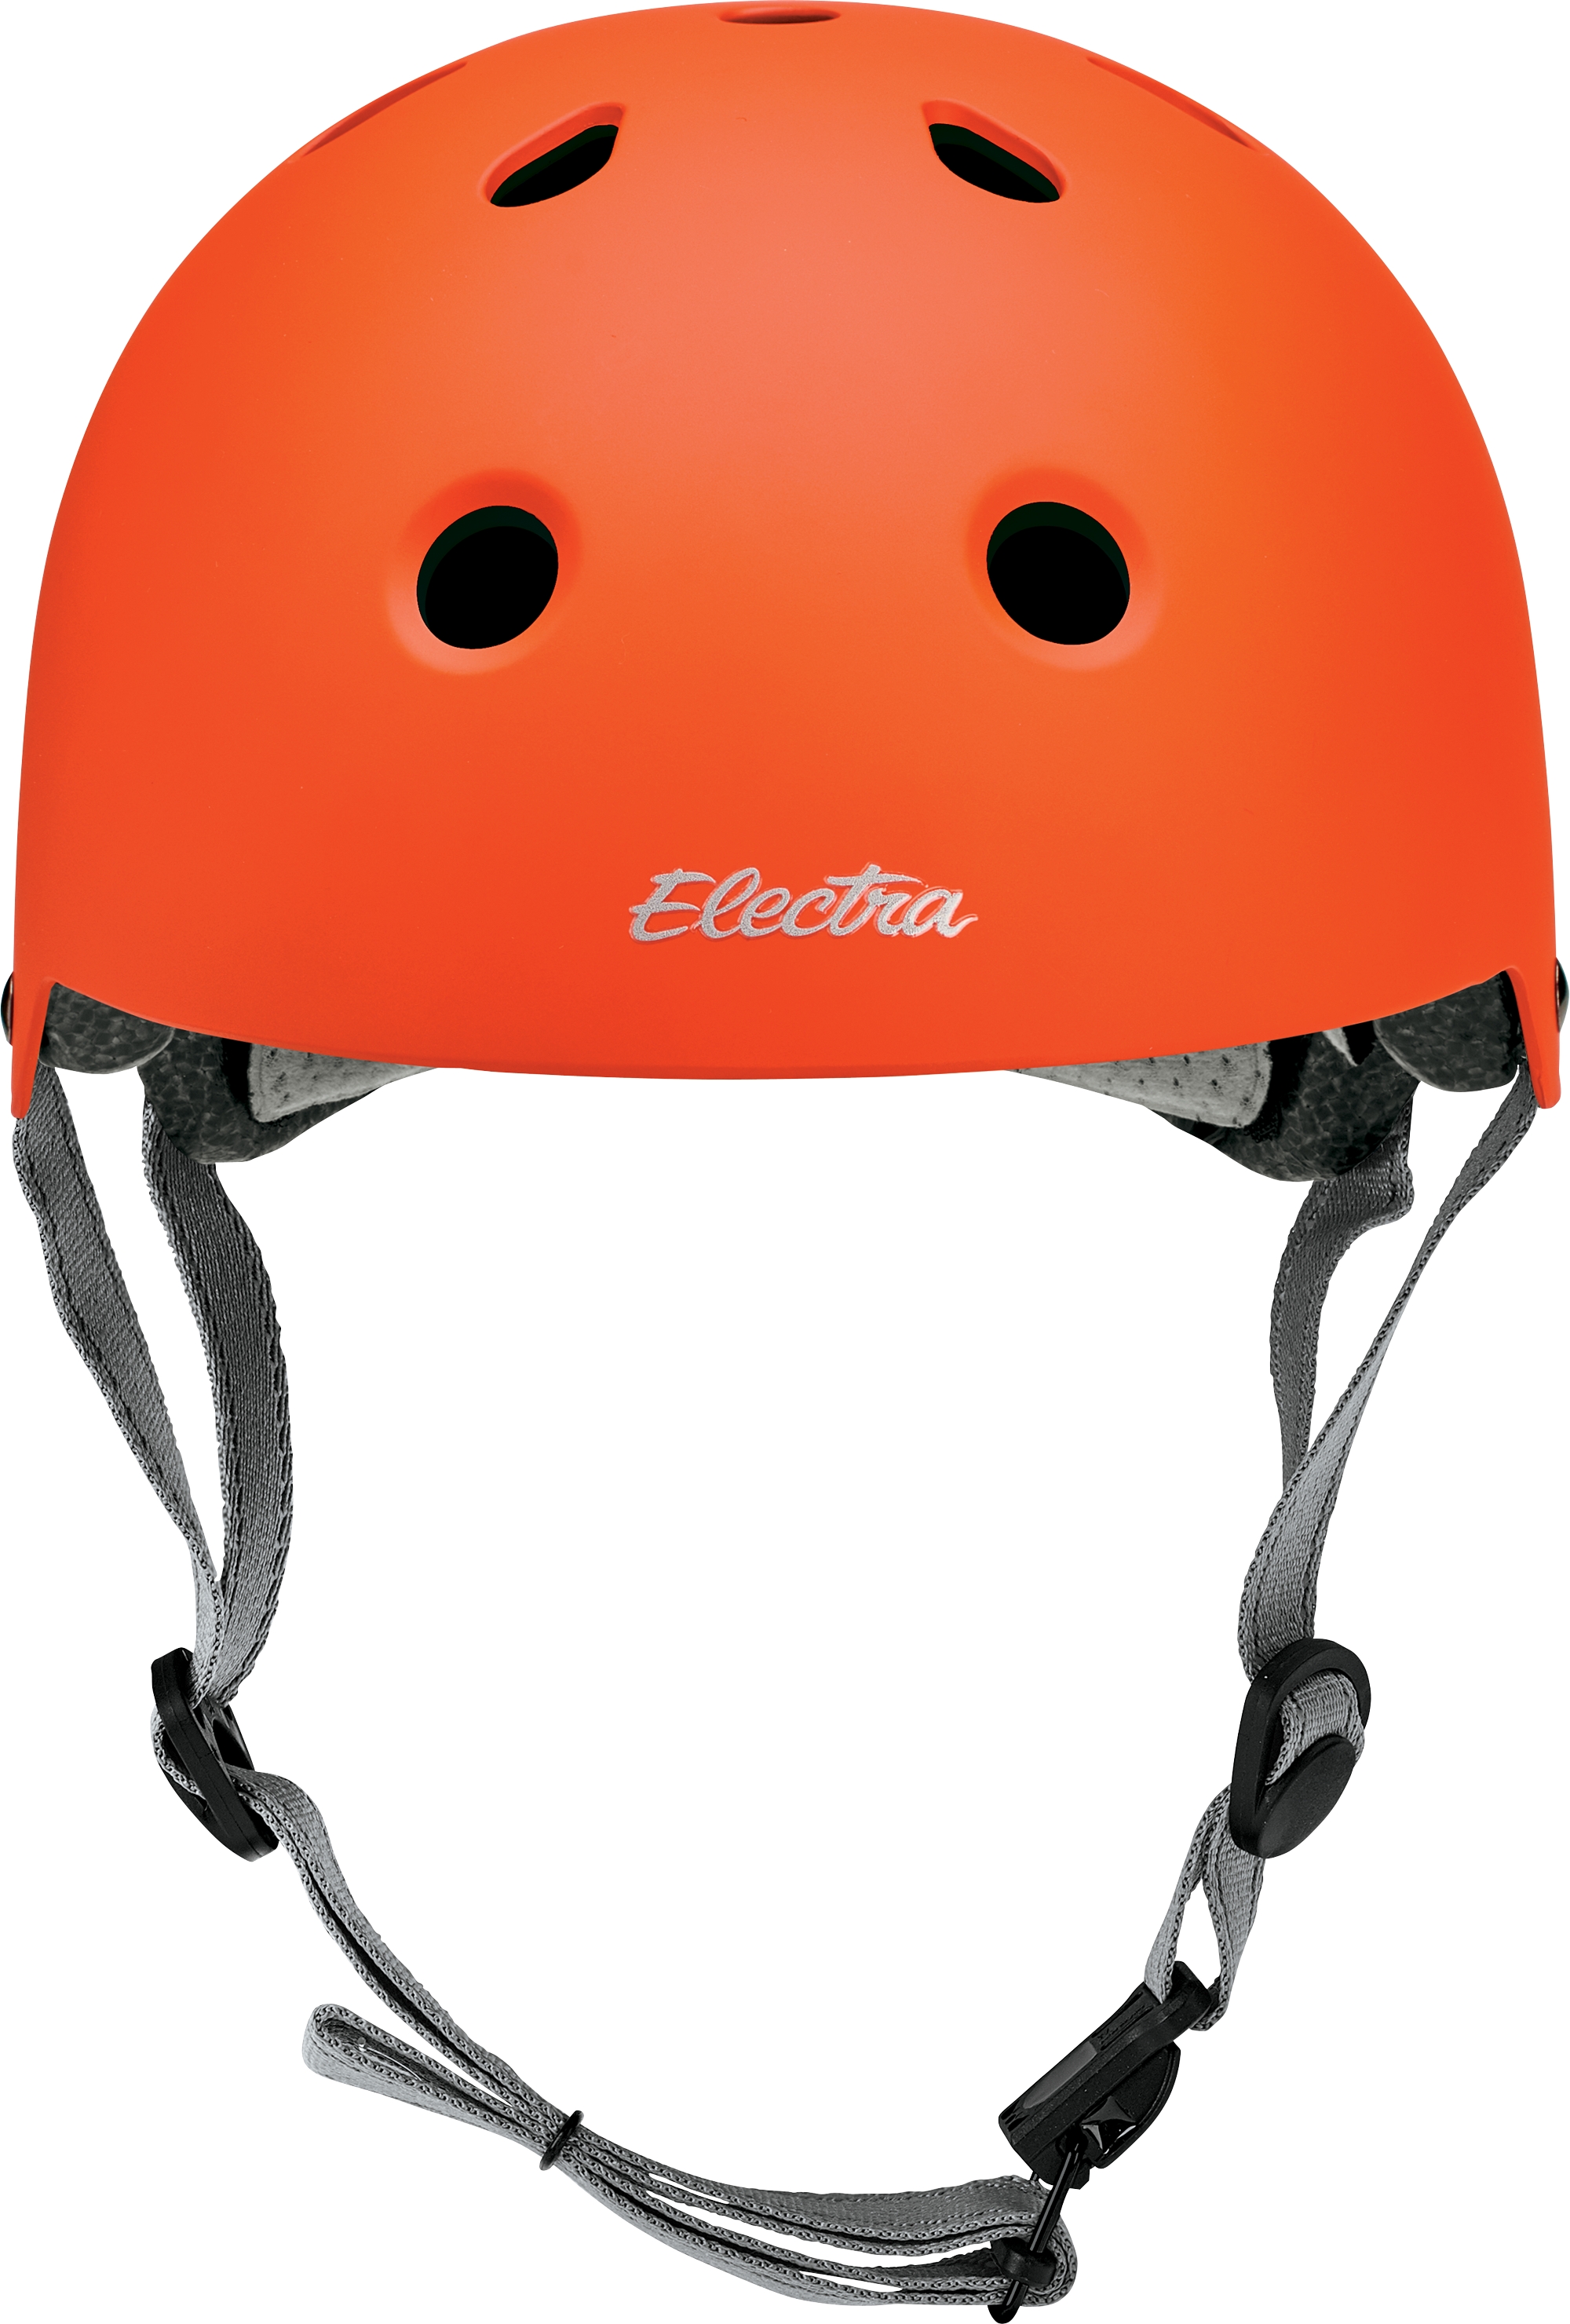 Electra Sea Glass Bike Helmet